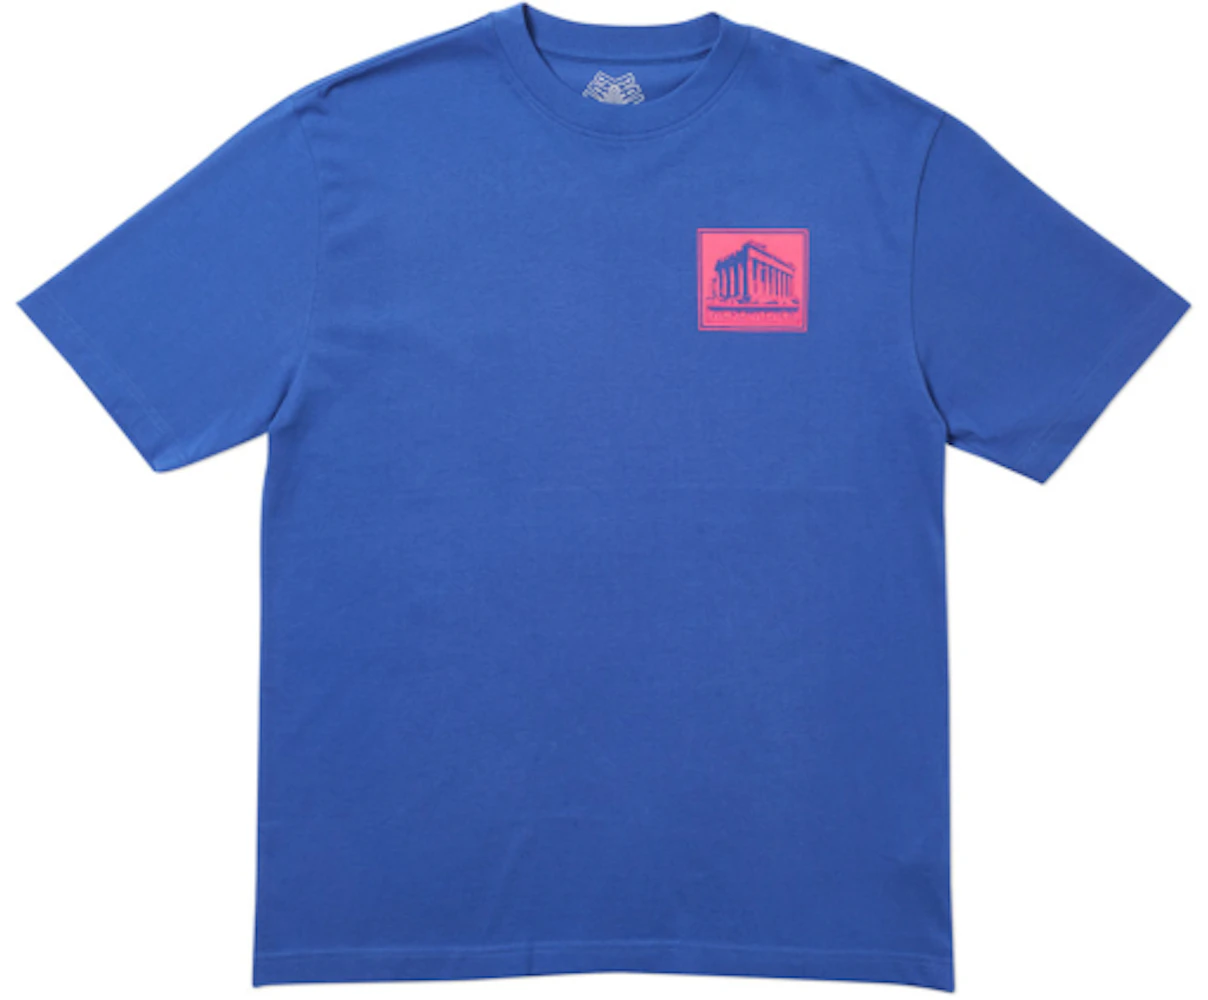 Palace Acropalace T-Shirt Blue Men's - SS19 - US